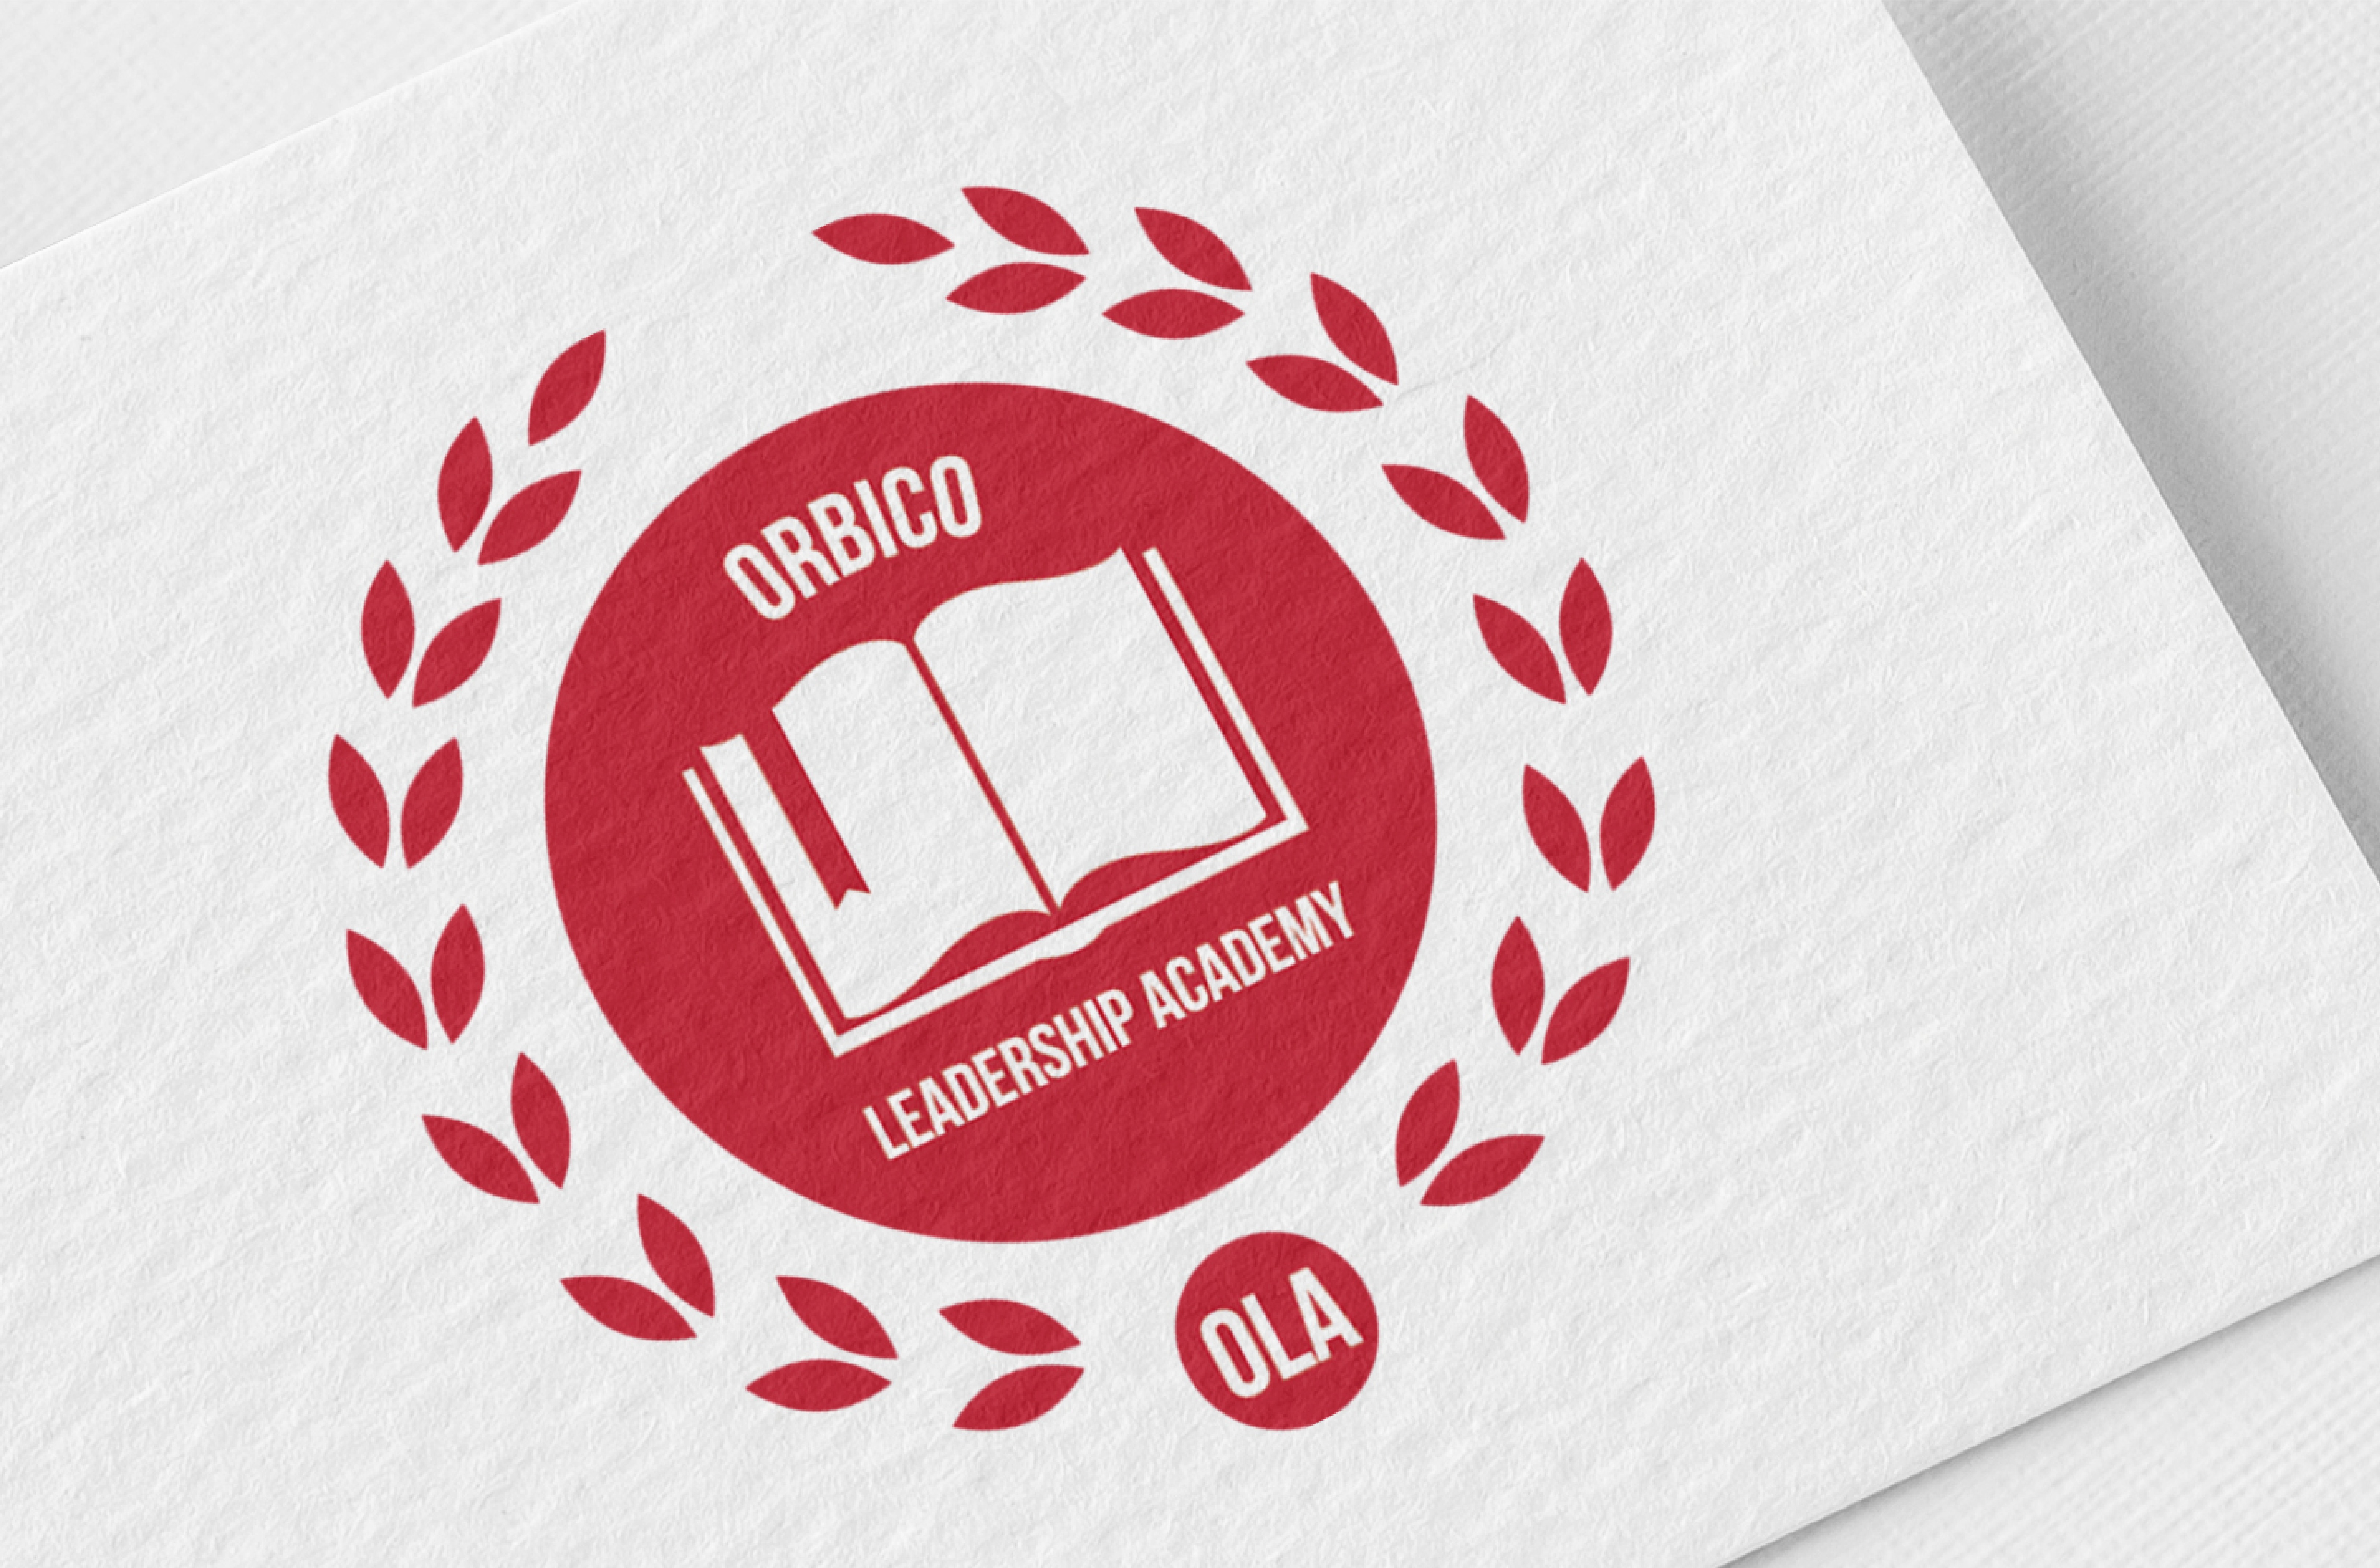 Orbico Academy logo